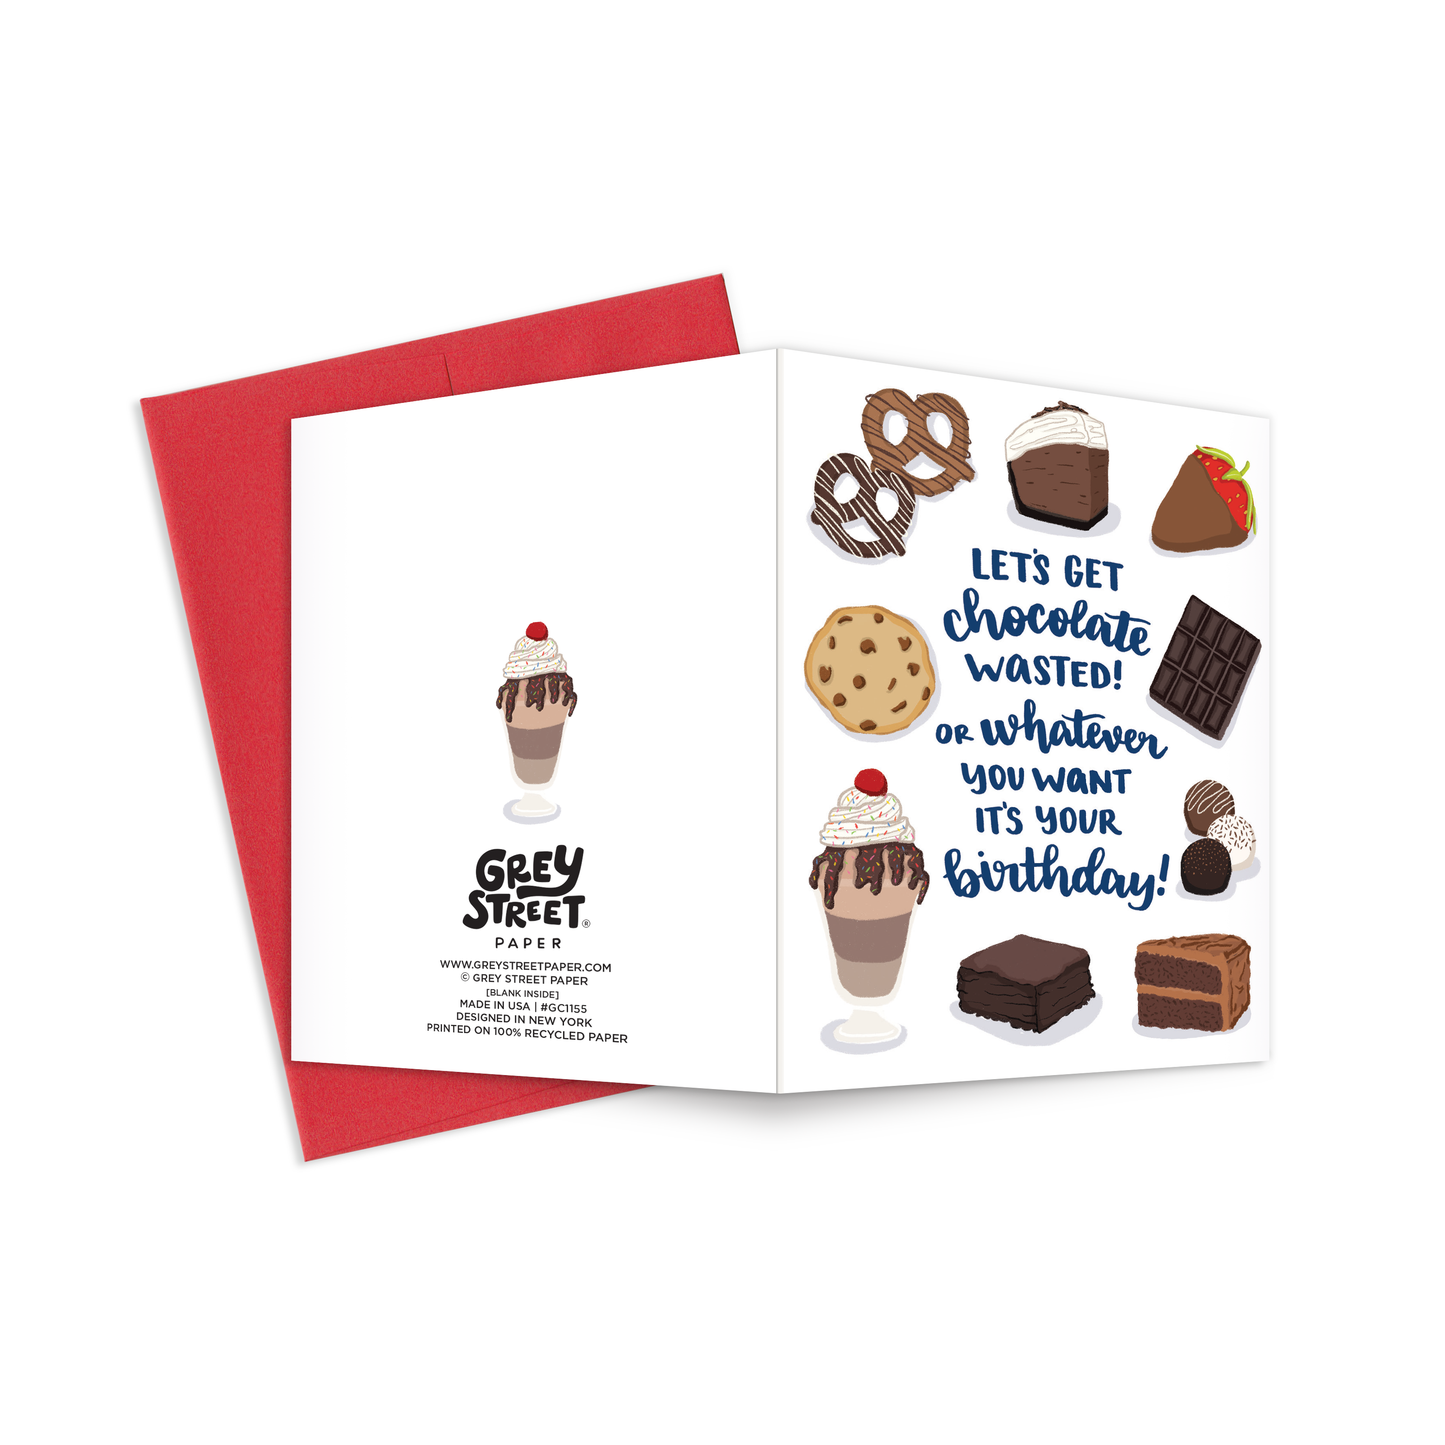 Chocolate Wasted Birthday Greeting Card